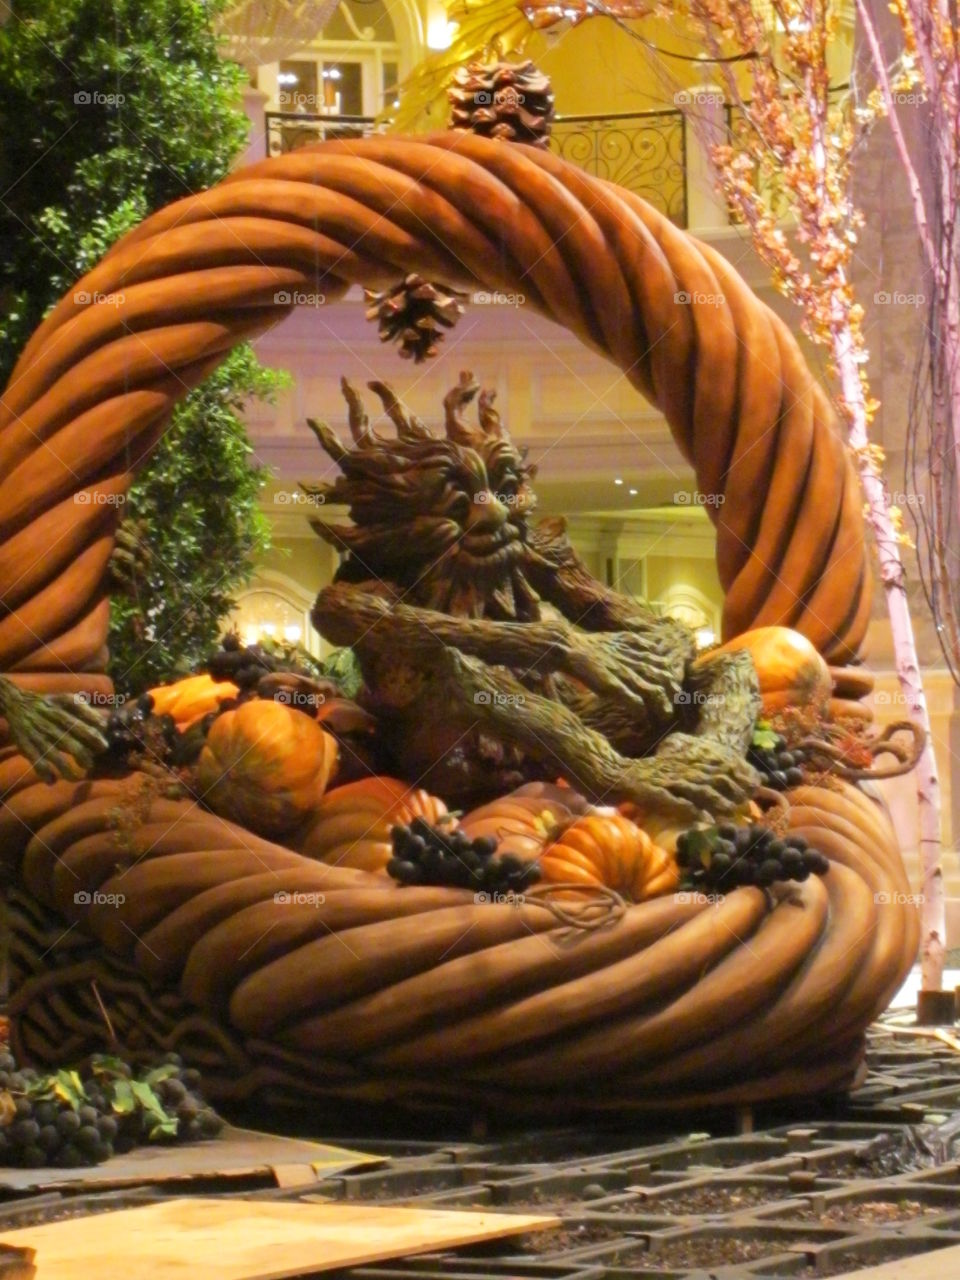 Unique Fall Art.  Autumn Tree and Pumpkins, Green Man Sculpture in Las Vegas Casino Display.